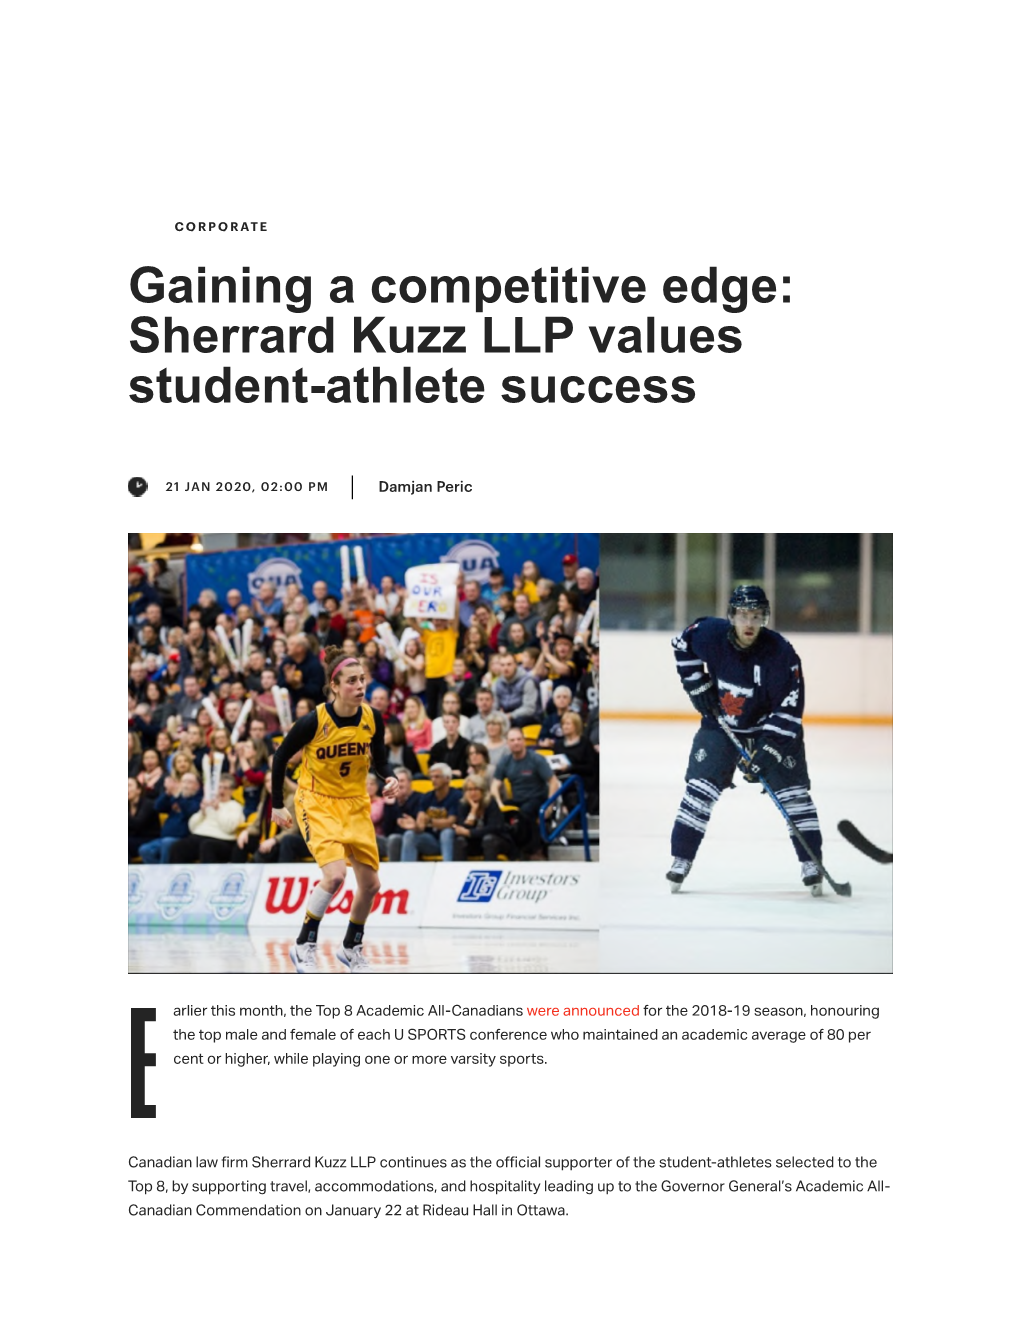 Gaining a Competitive Edge: Sherrard Kuzz LLP Values Student-Athlete Success